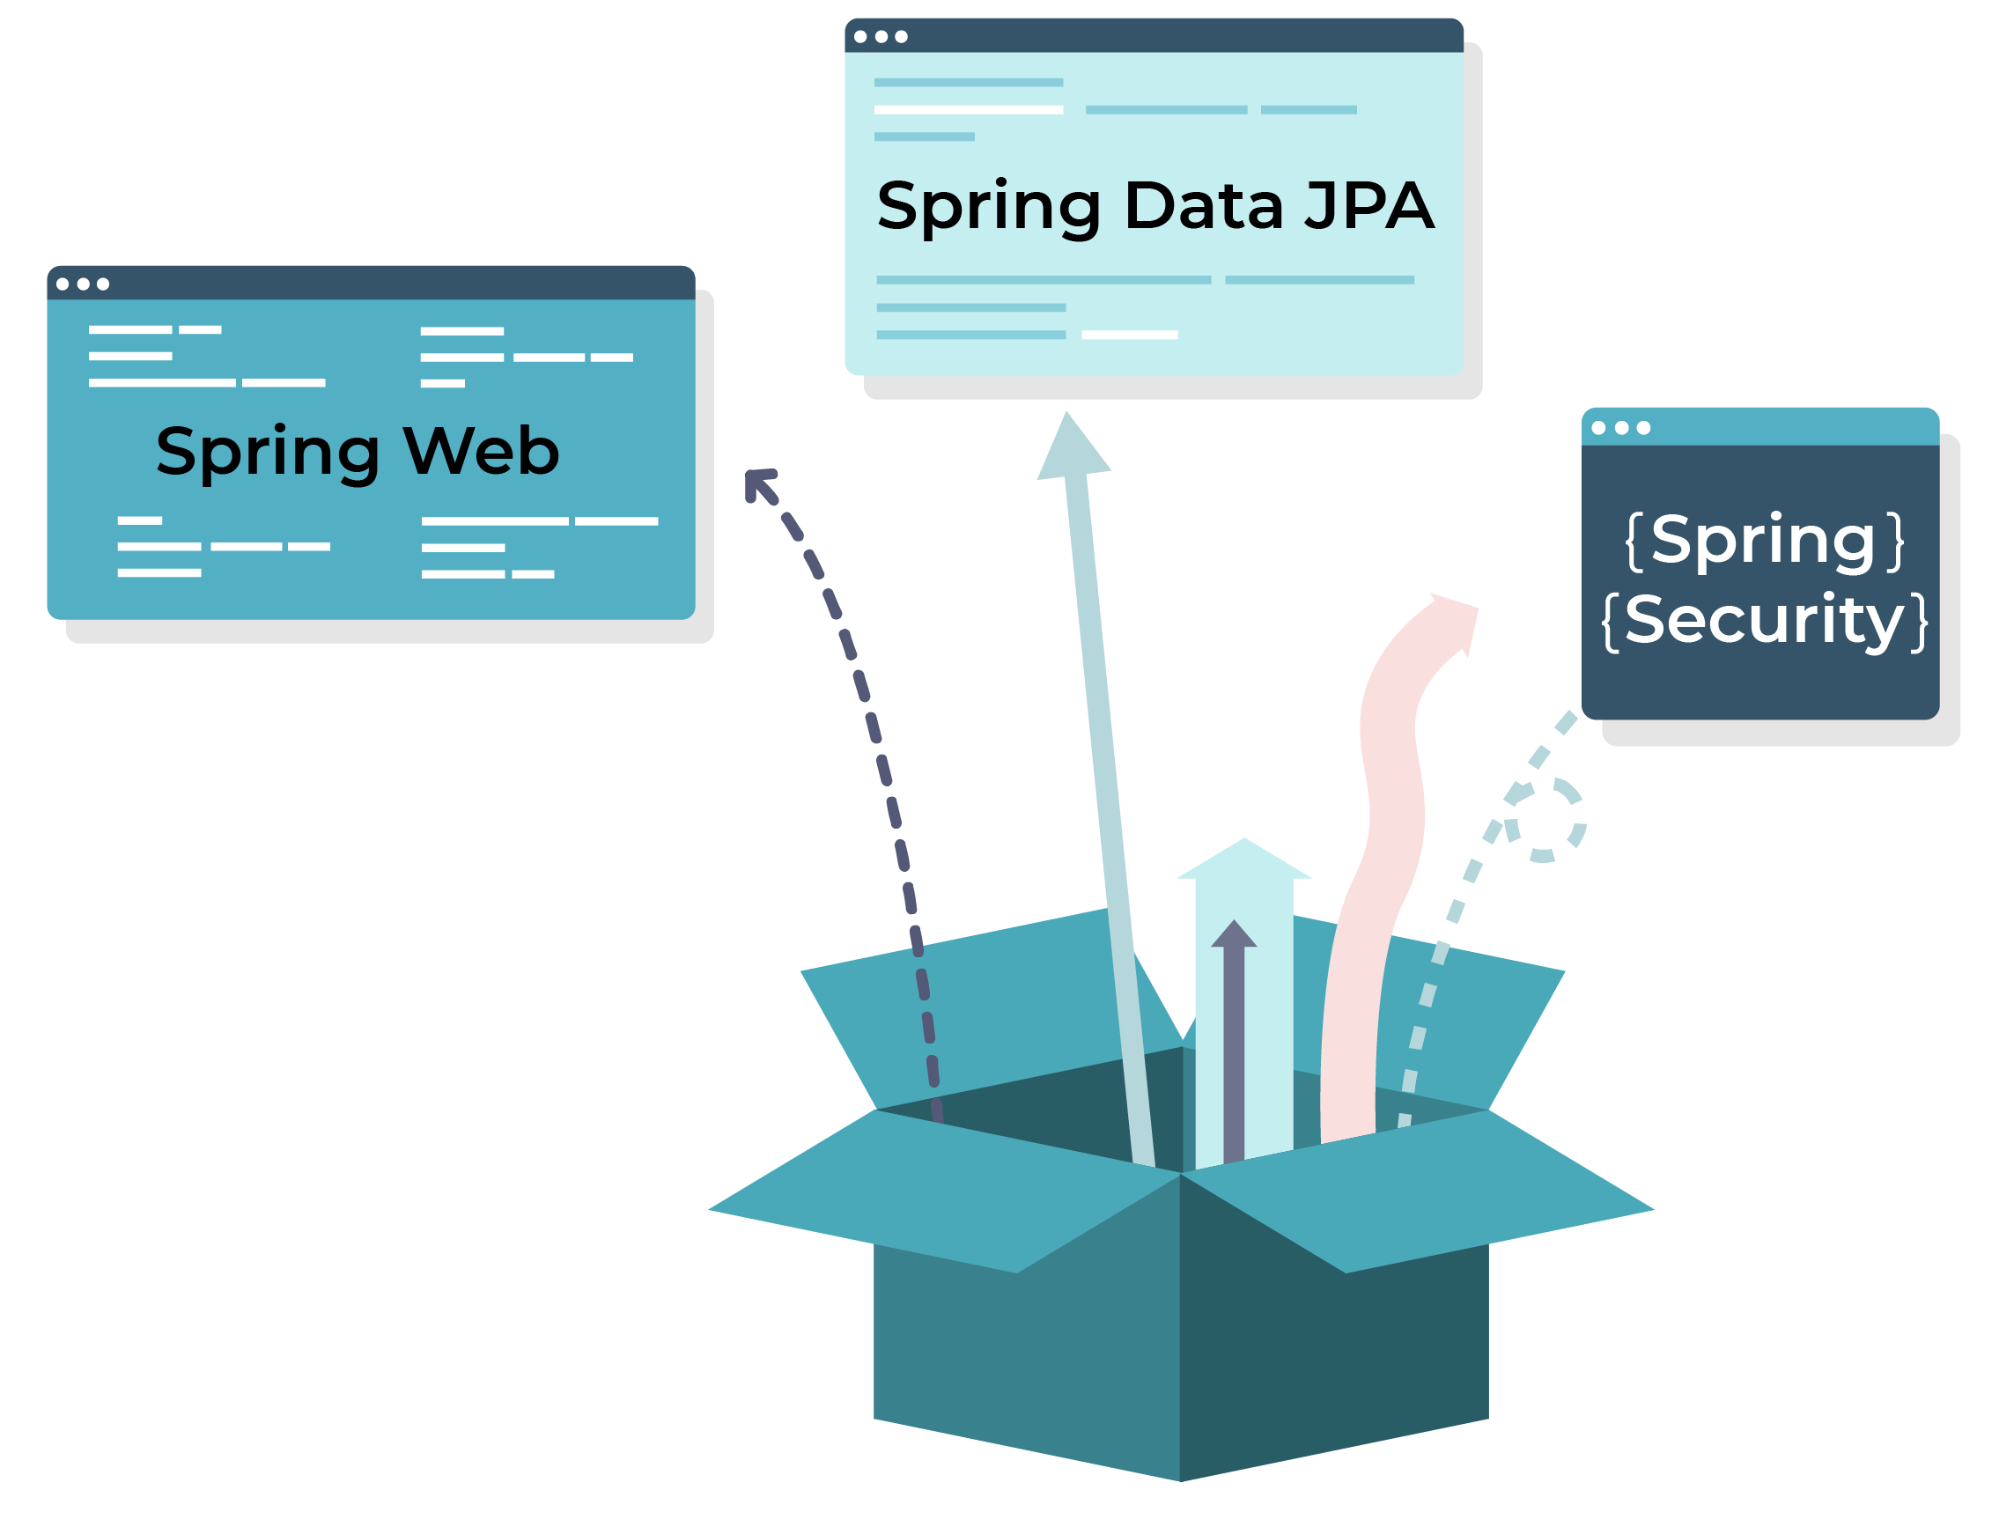 Une boîte dans laquelle on trouve Spring Web, Spring Data JPA, {Spring Security}.